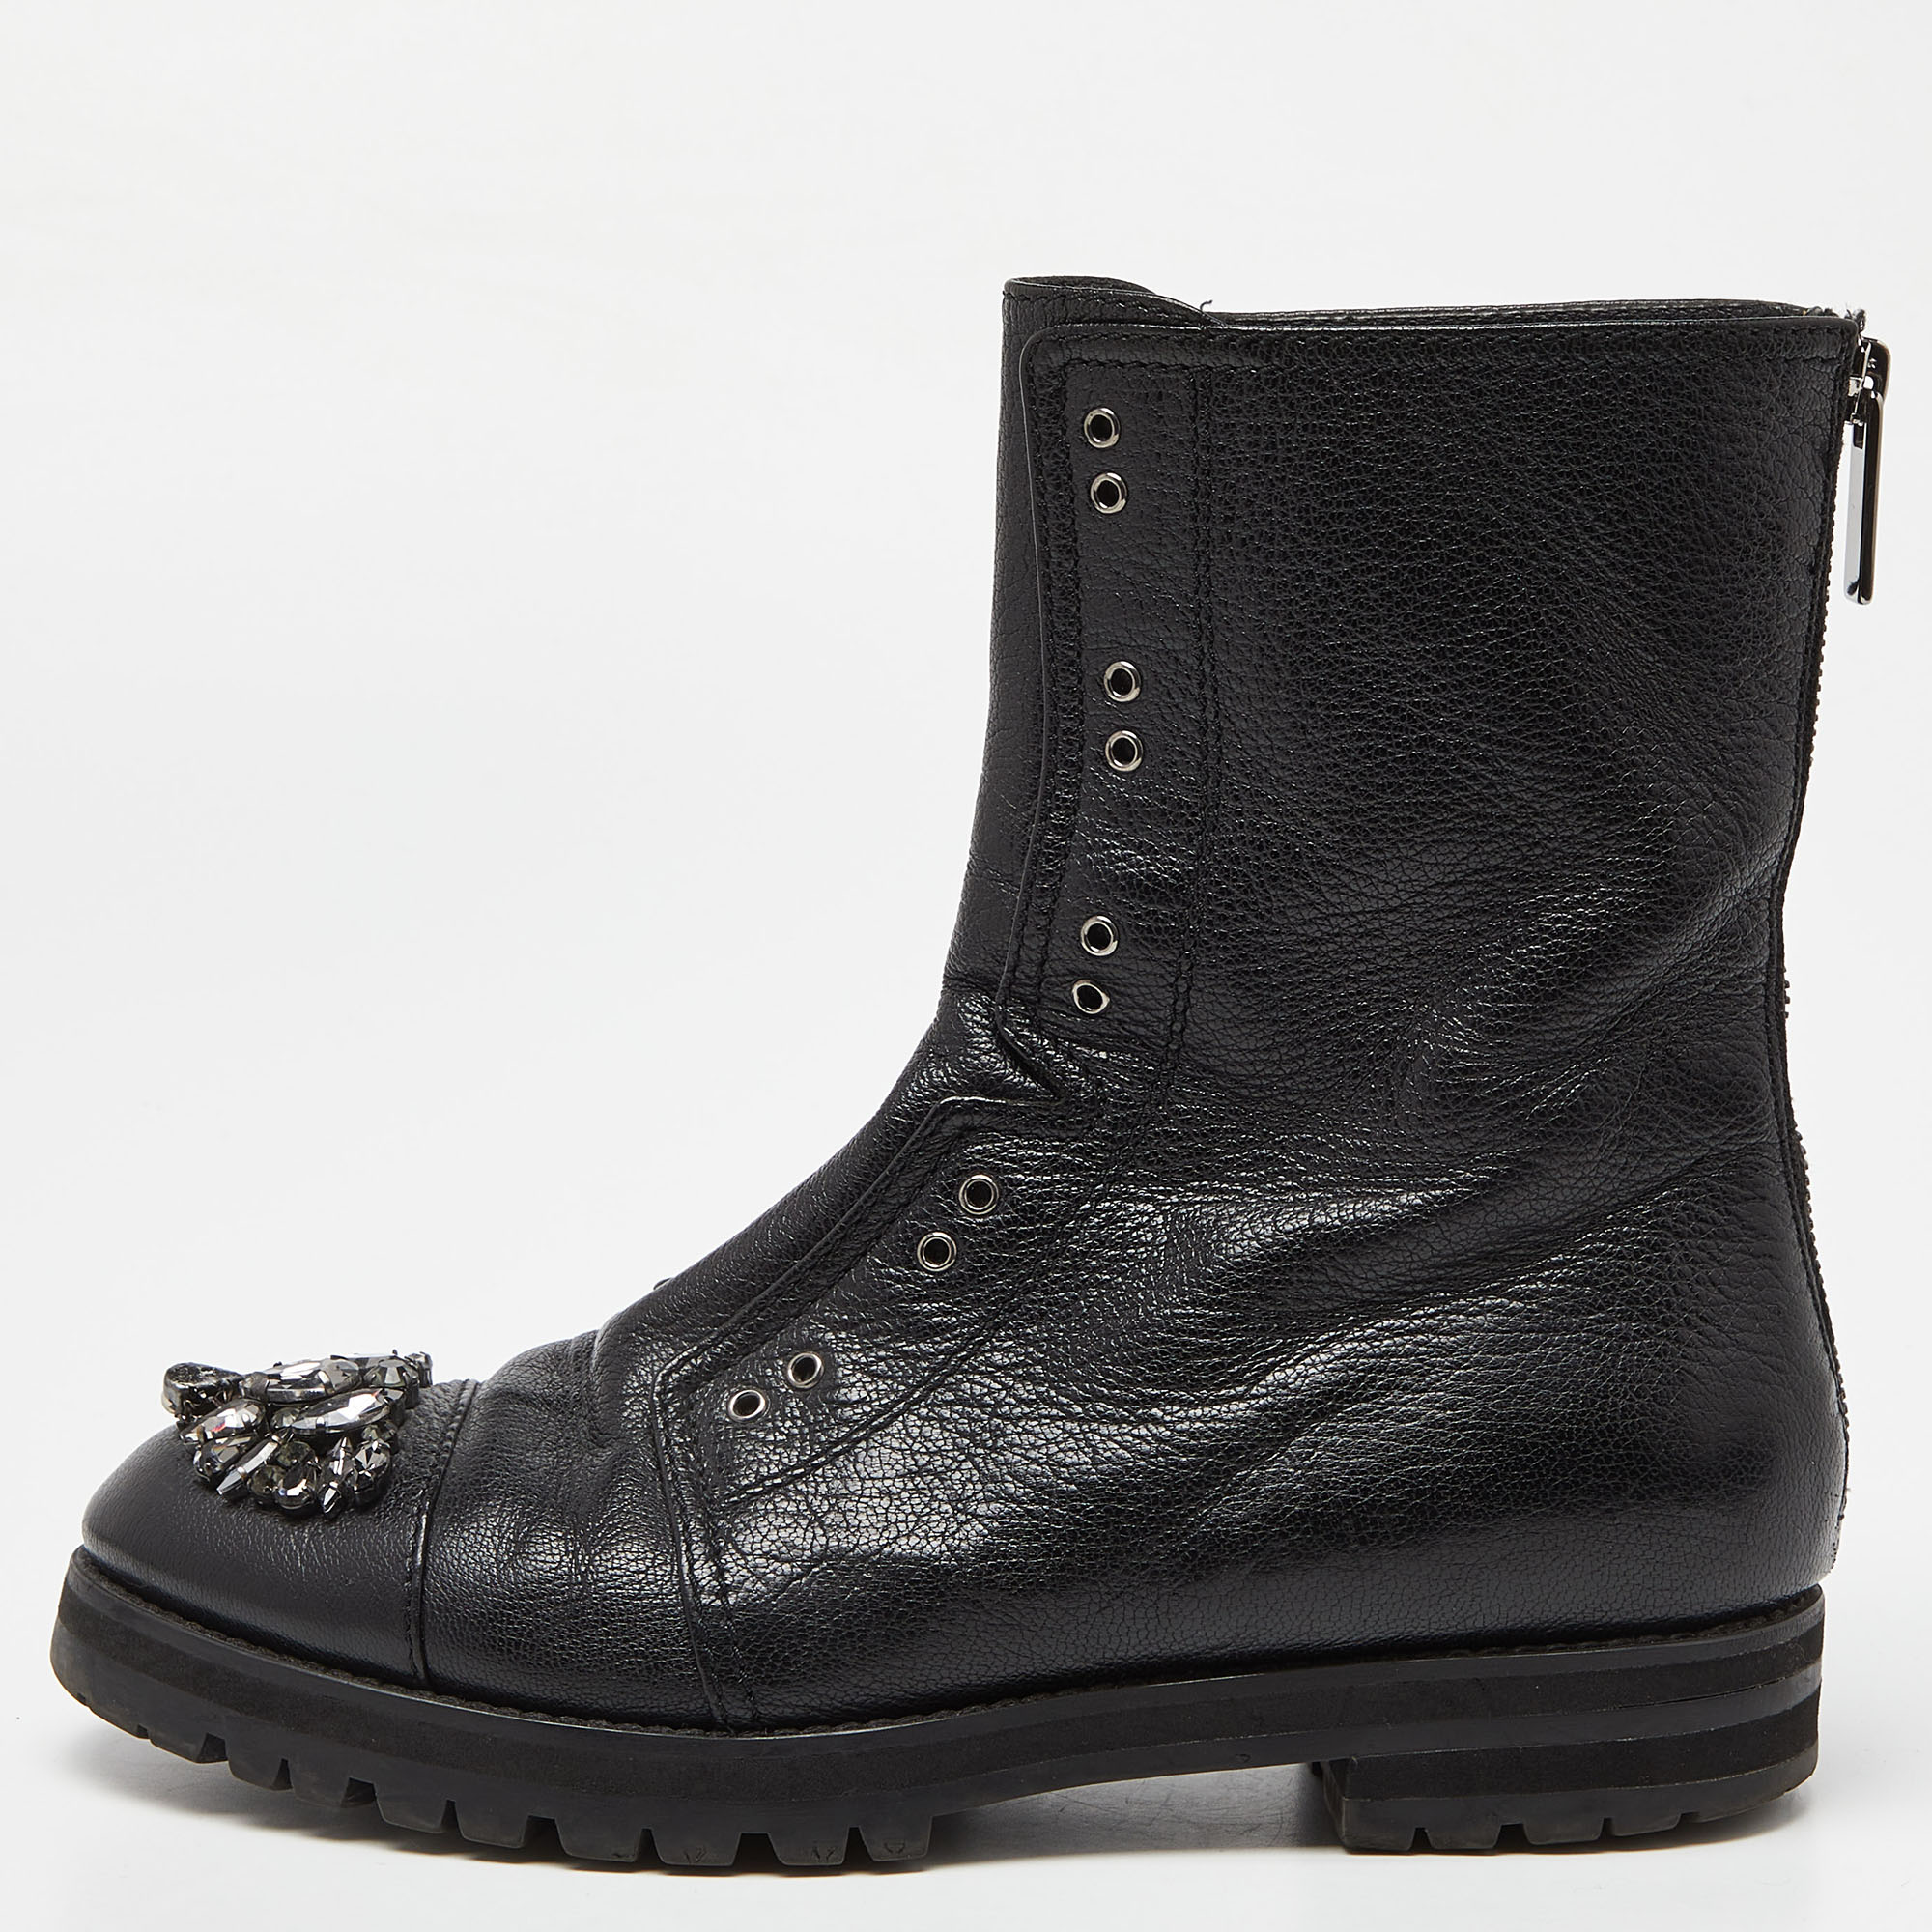 Jimmy choo black leather hatcher combat boots size 38